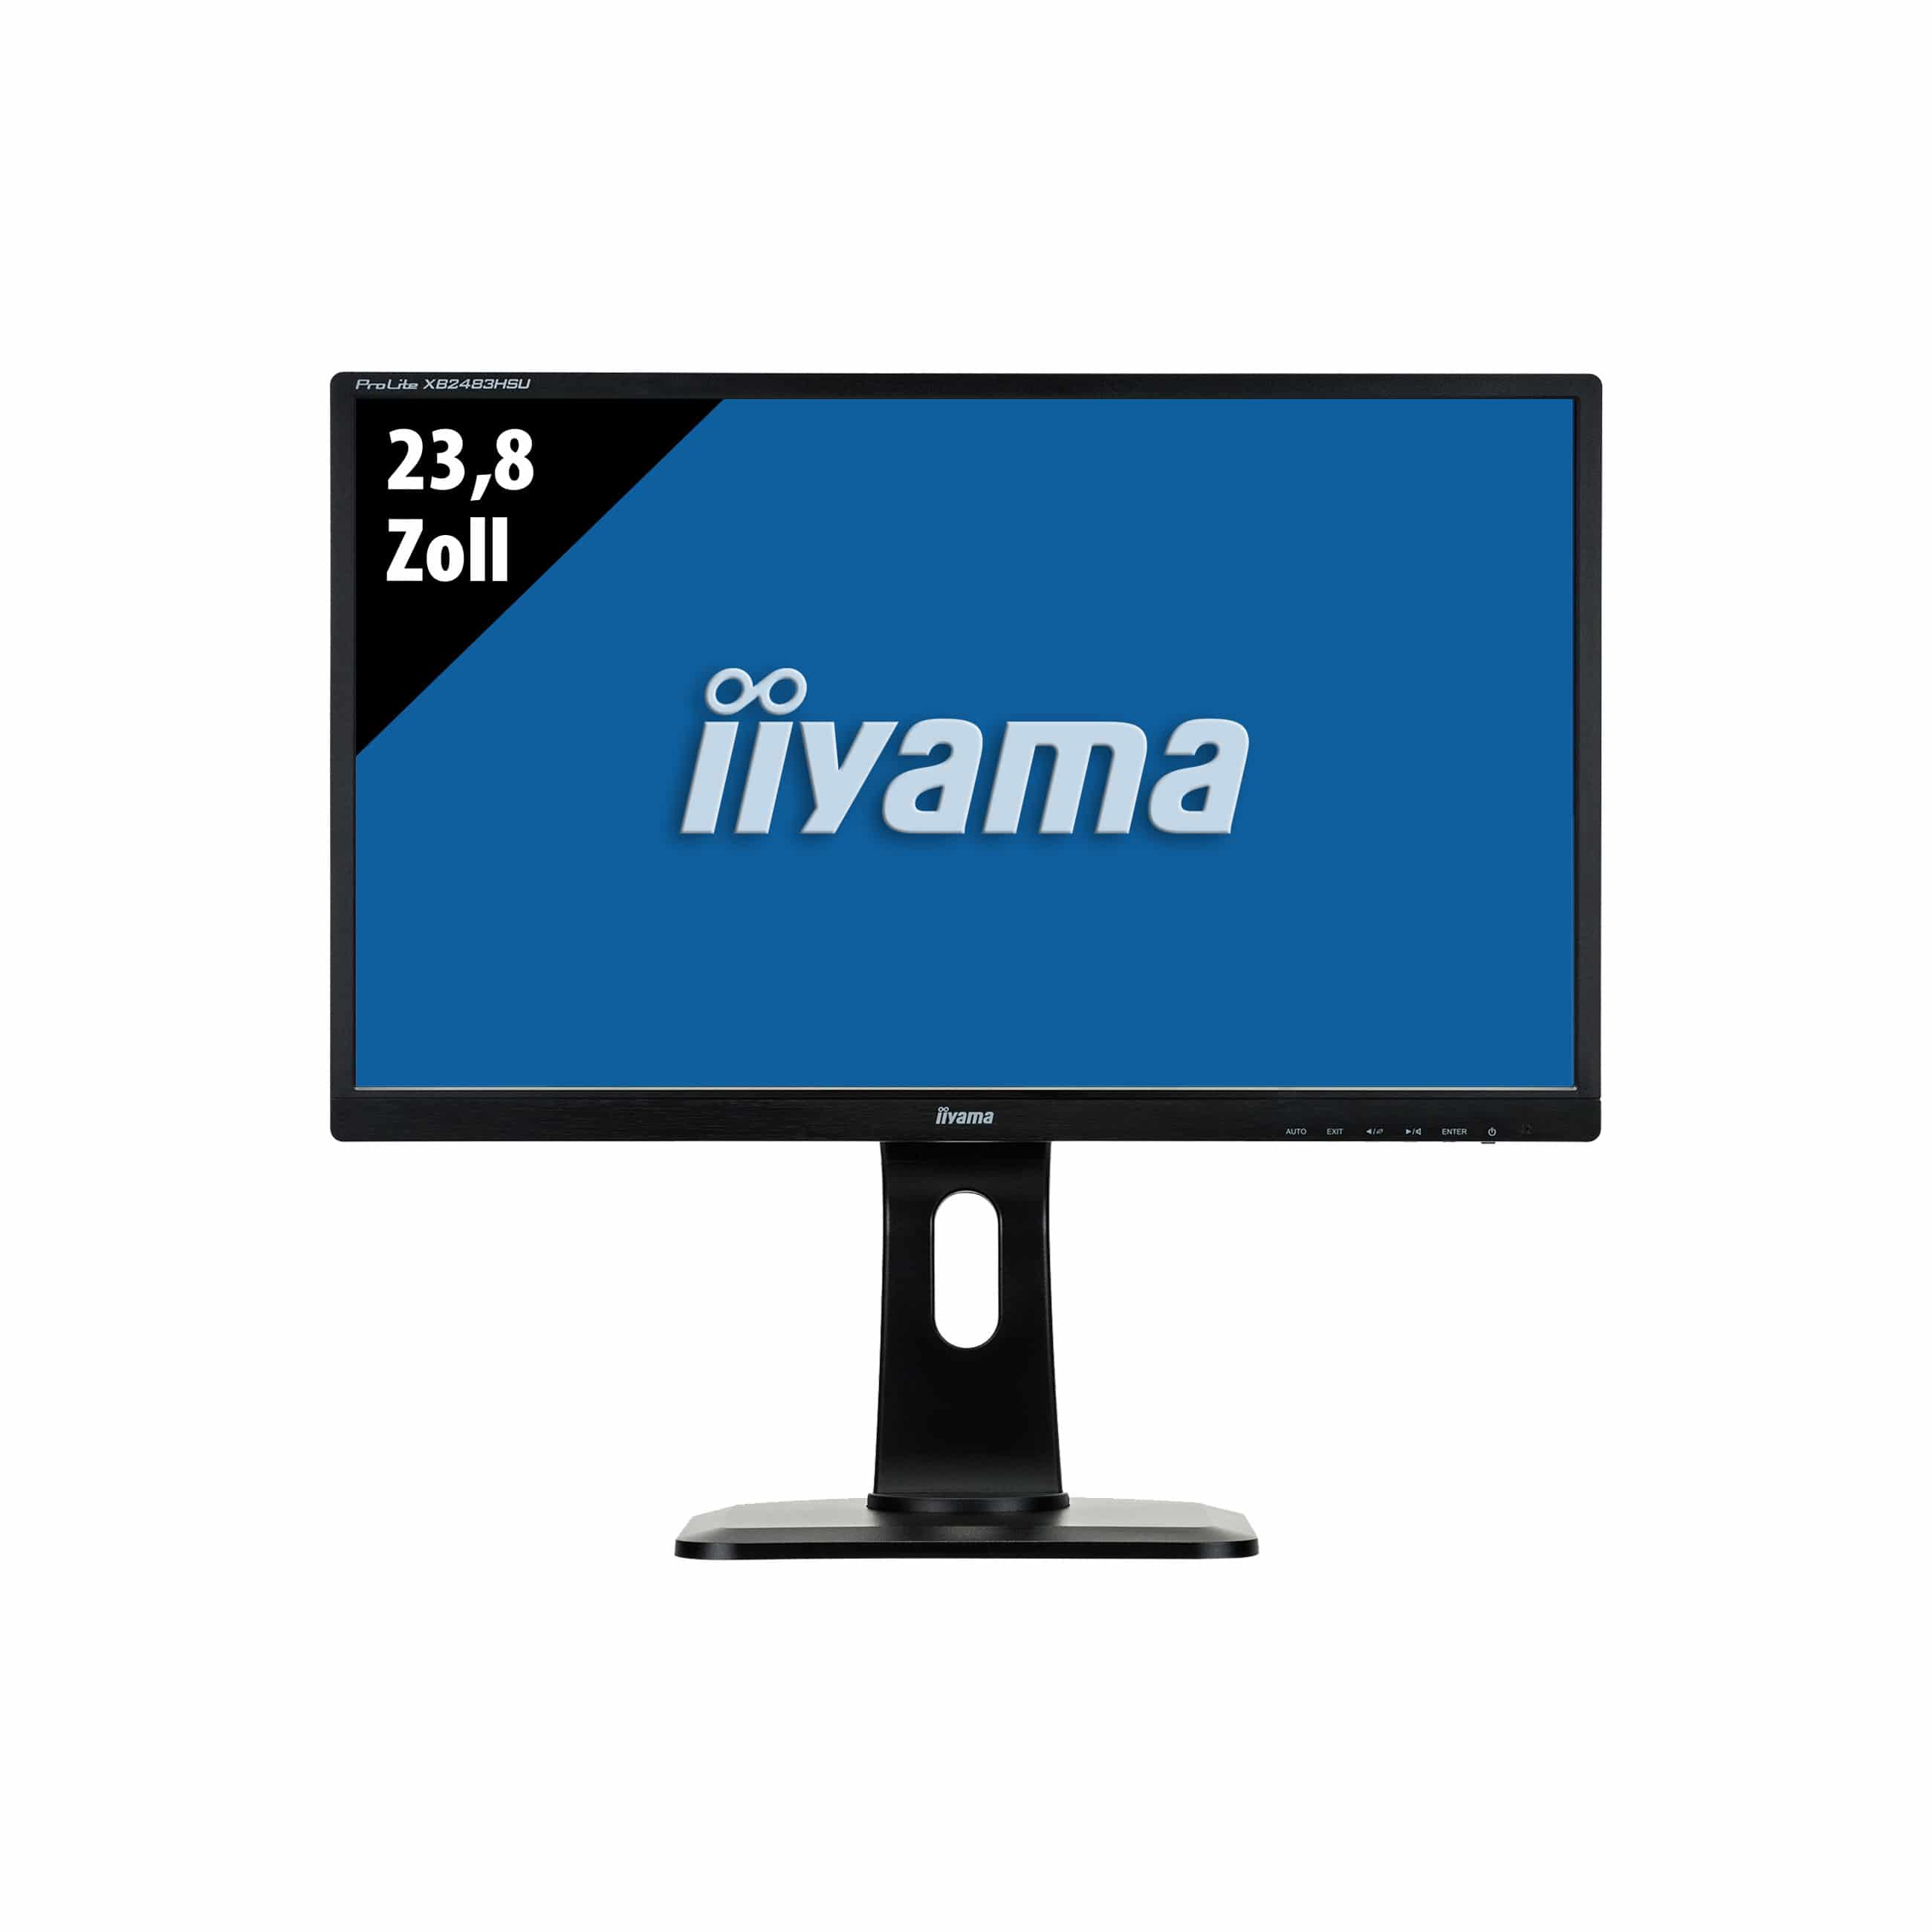 Iiyama ProLite XB2483HSU-B2 - 1920 x 1080 - FHD - 23,8 Zoll - 4 ms - Schwarz